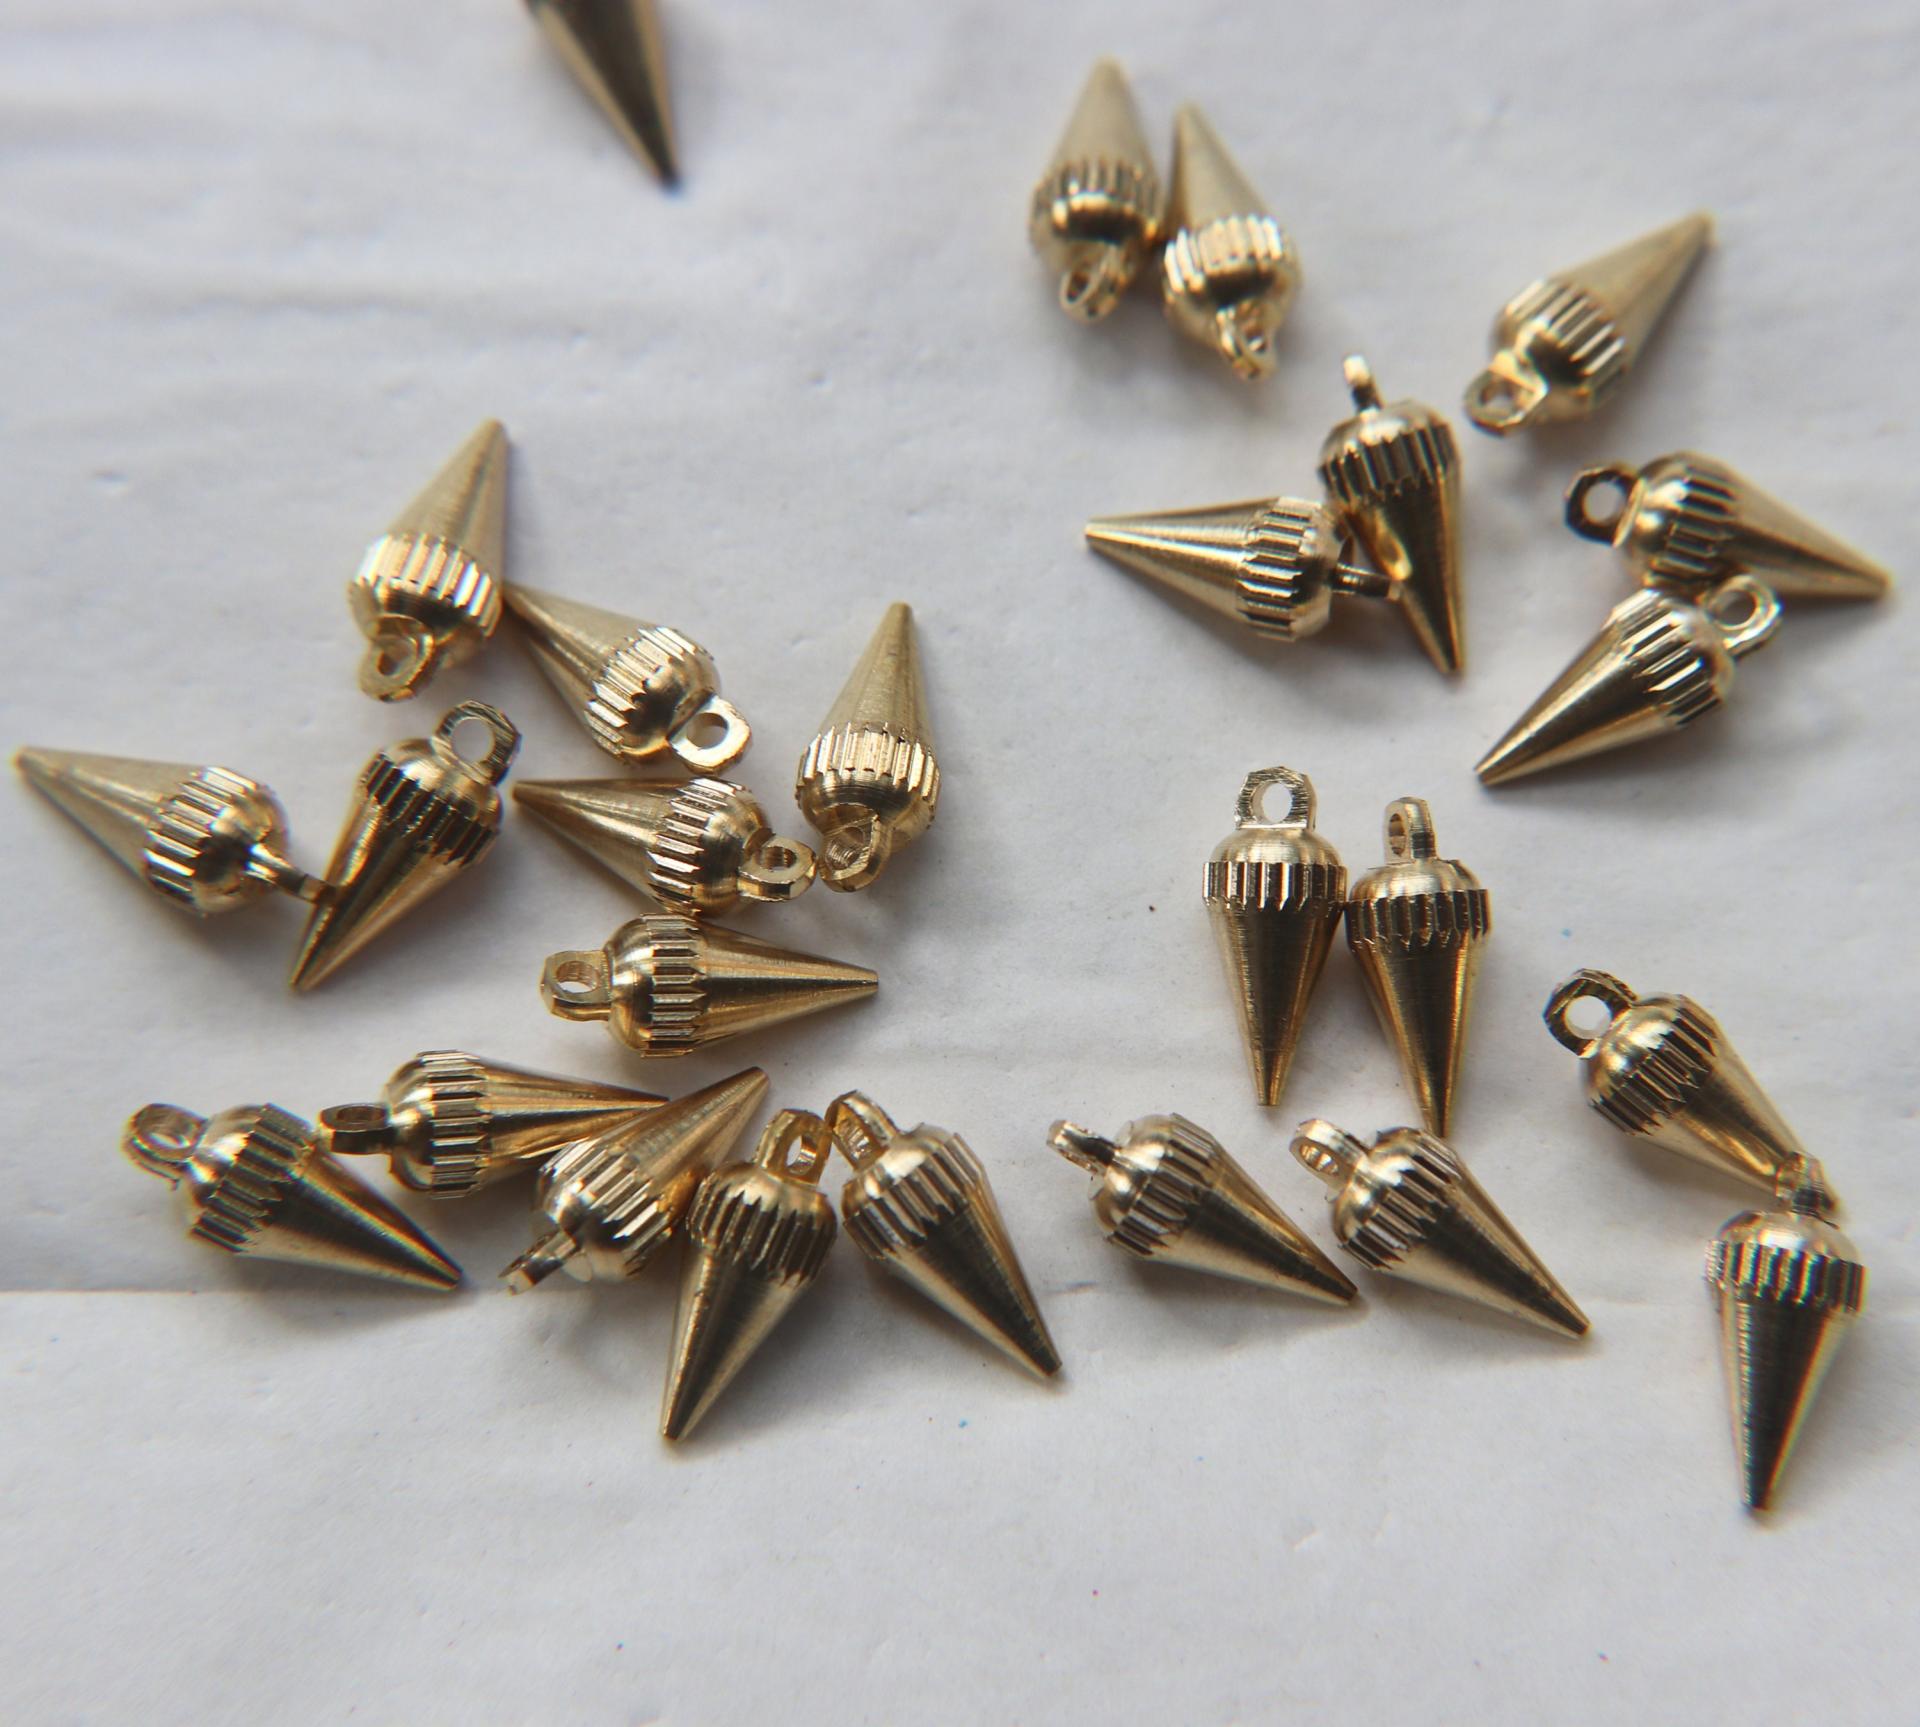 Solid Metal Spike Drops, Spikedrop Charms, in brass 15x6mm 2mm Loop 10/50 pieces vintage findings, jewlery making, art deco premium supplies